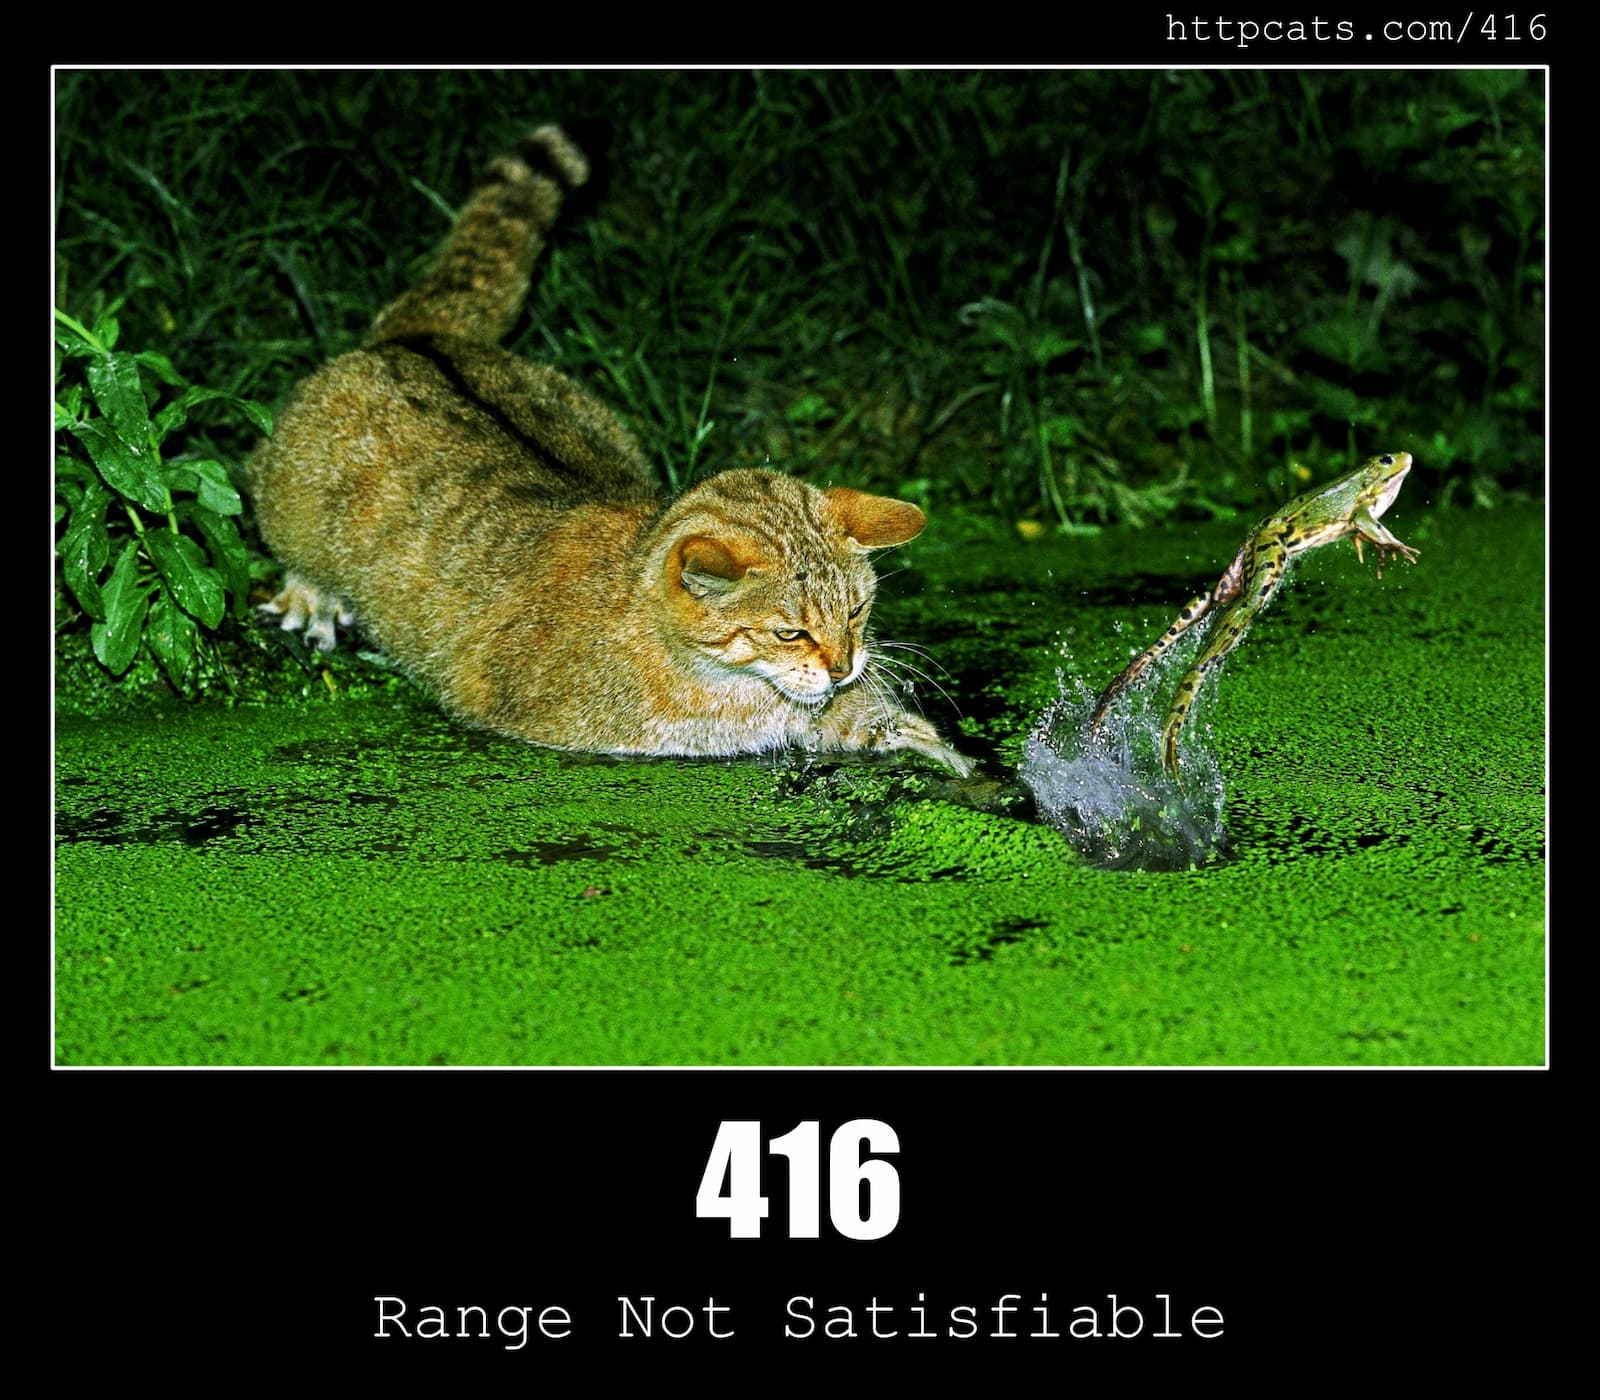 HTTP Status Code 416 Range Not Satisfiable & Cats